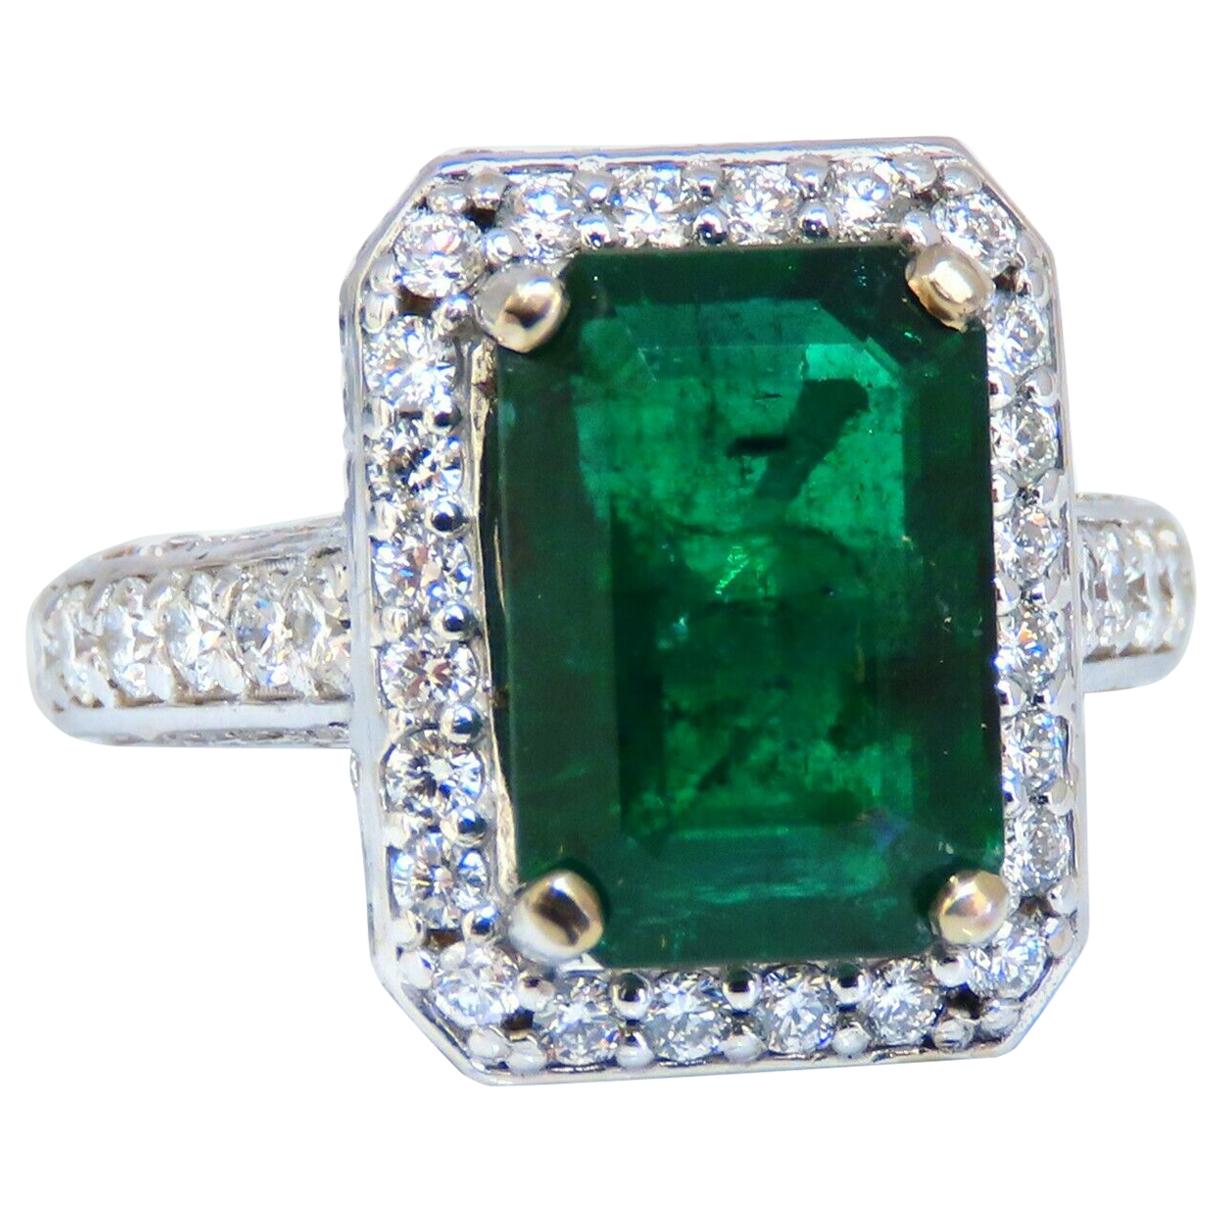 5.52 Carat Natural Vivid Green Emerald Diamonds Ring 14kt Mod Halo Bead Set Deco